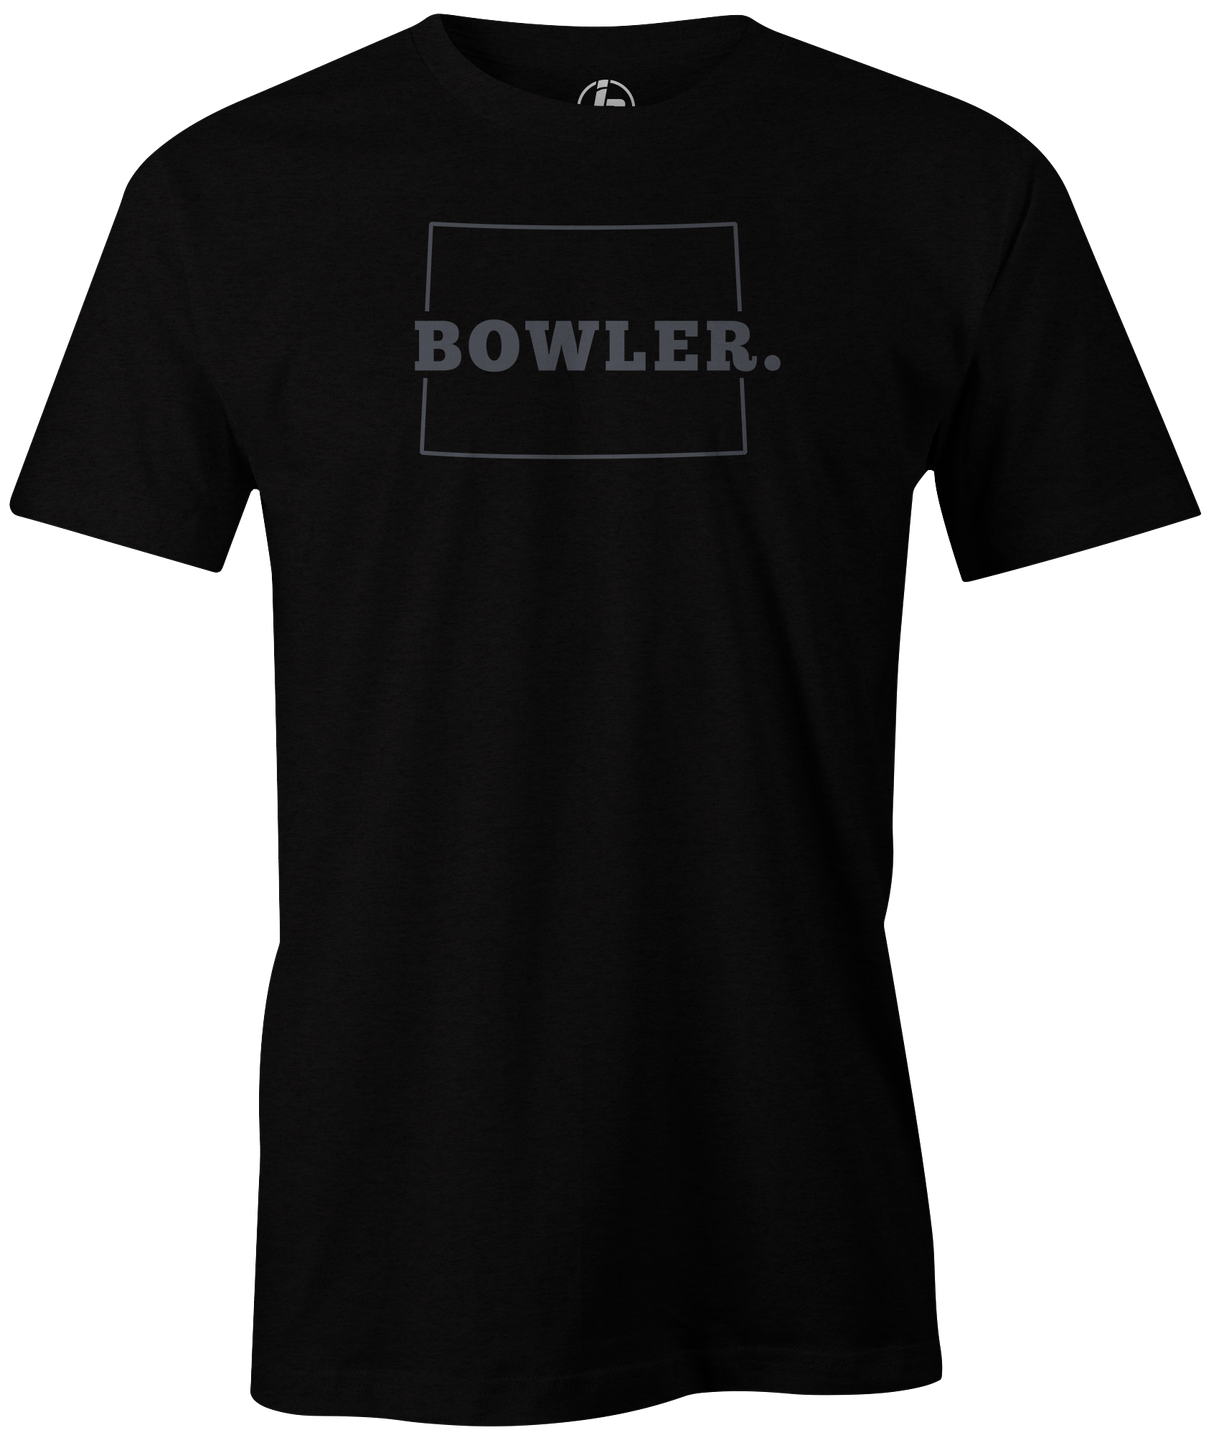 Colorado State Men's Bowling T-shirt, Black, Cool, novelty, tshirt, tee, tee-shirt, tee shirt, teeshirt, team, comfortable